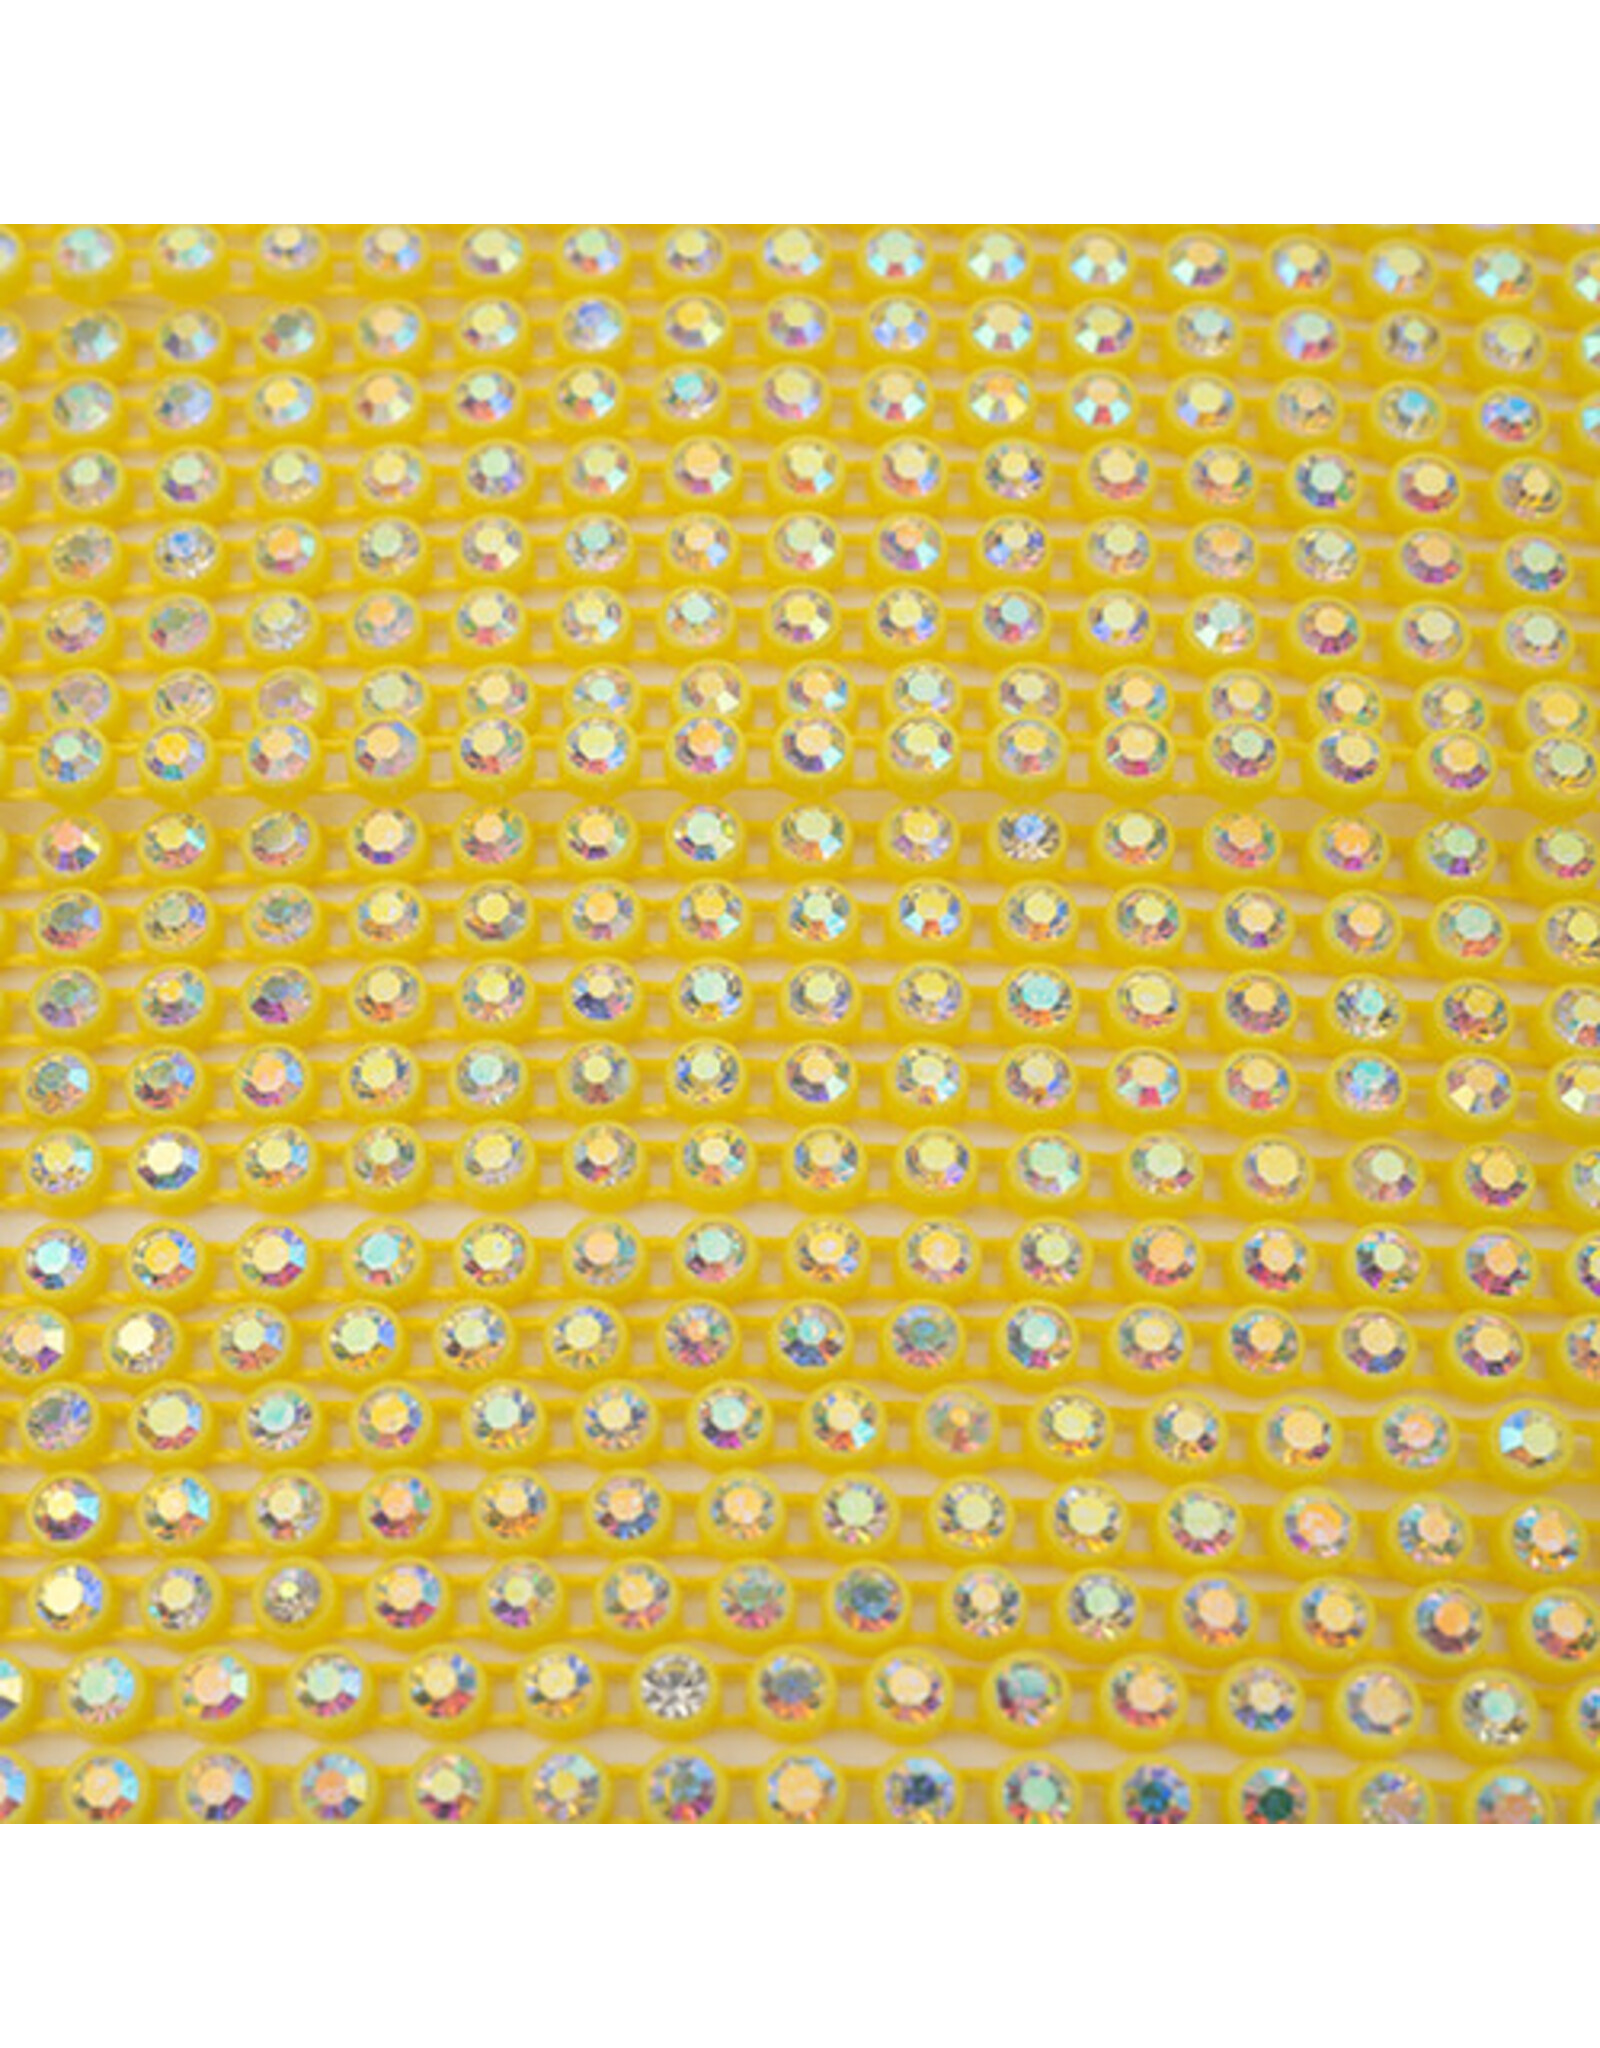 Rhinestone Banding 1 row 2.4mm (ss8) Clear AB  Yellow  x1 foot